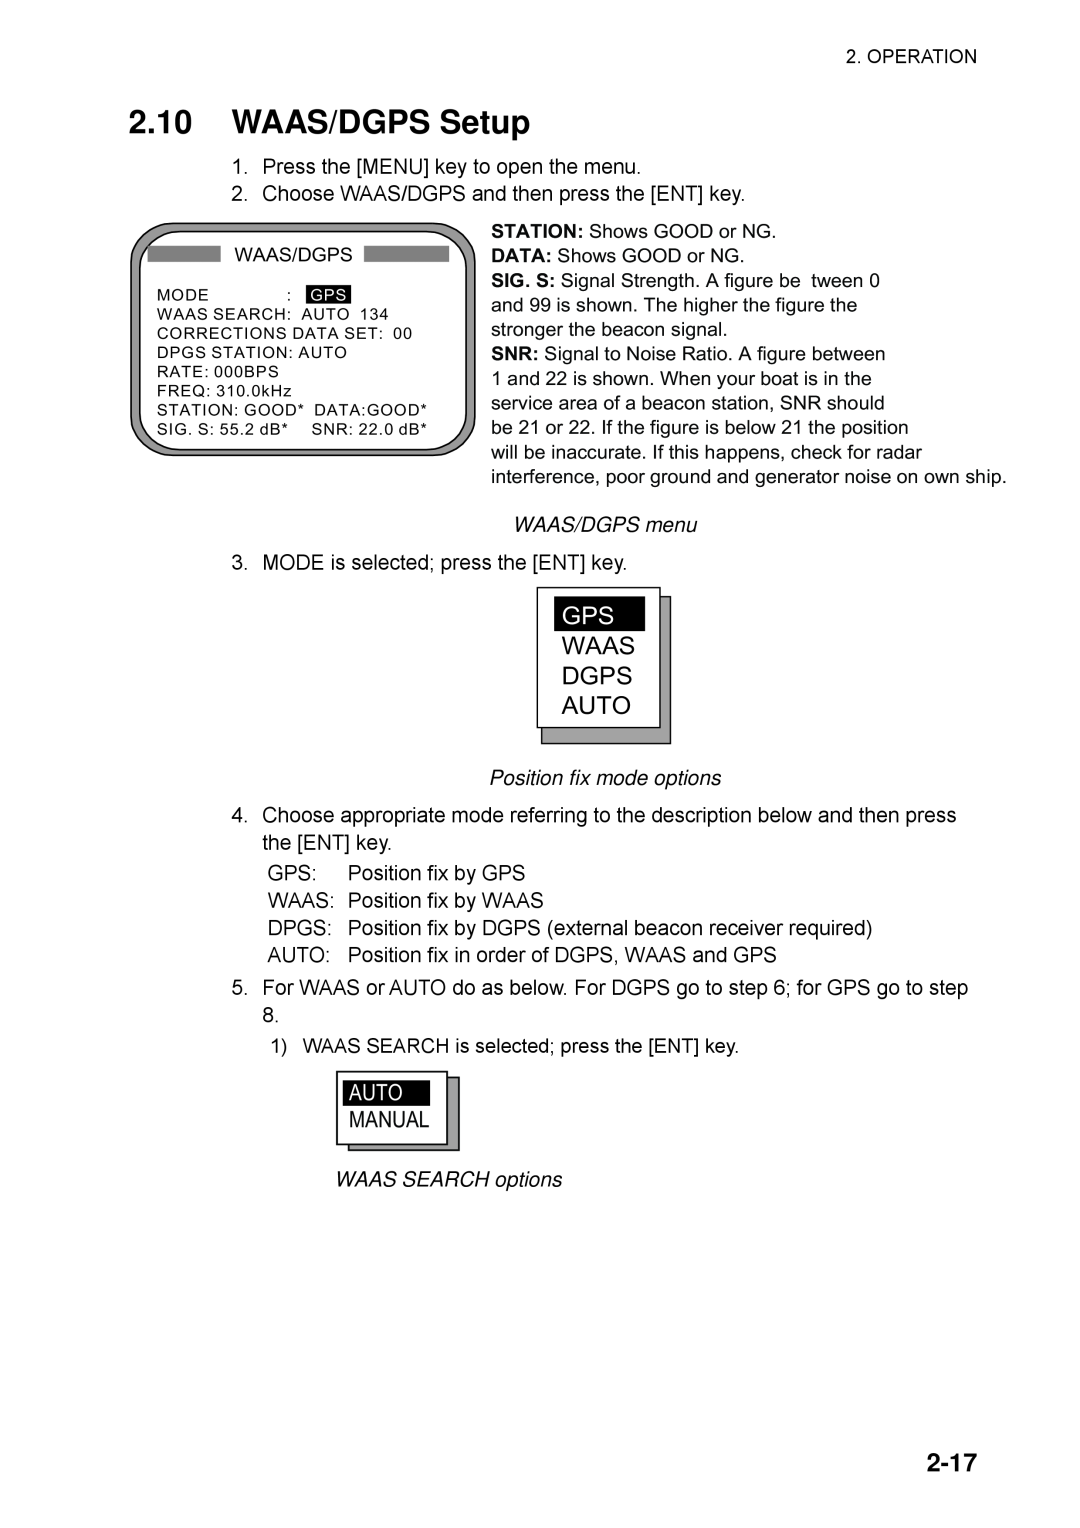 Furuno SC-110 manual 2.10WAAS/DGPS Setup, 2-17, Waas Dgps Auto, Manual, WAAS/DGPS menu, Position fix mode options 